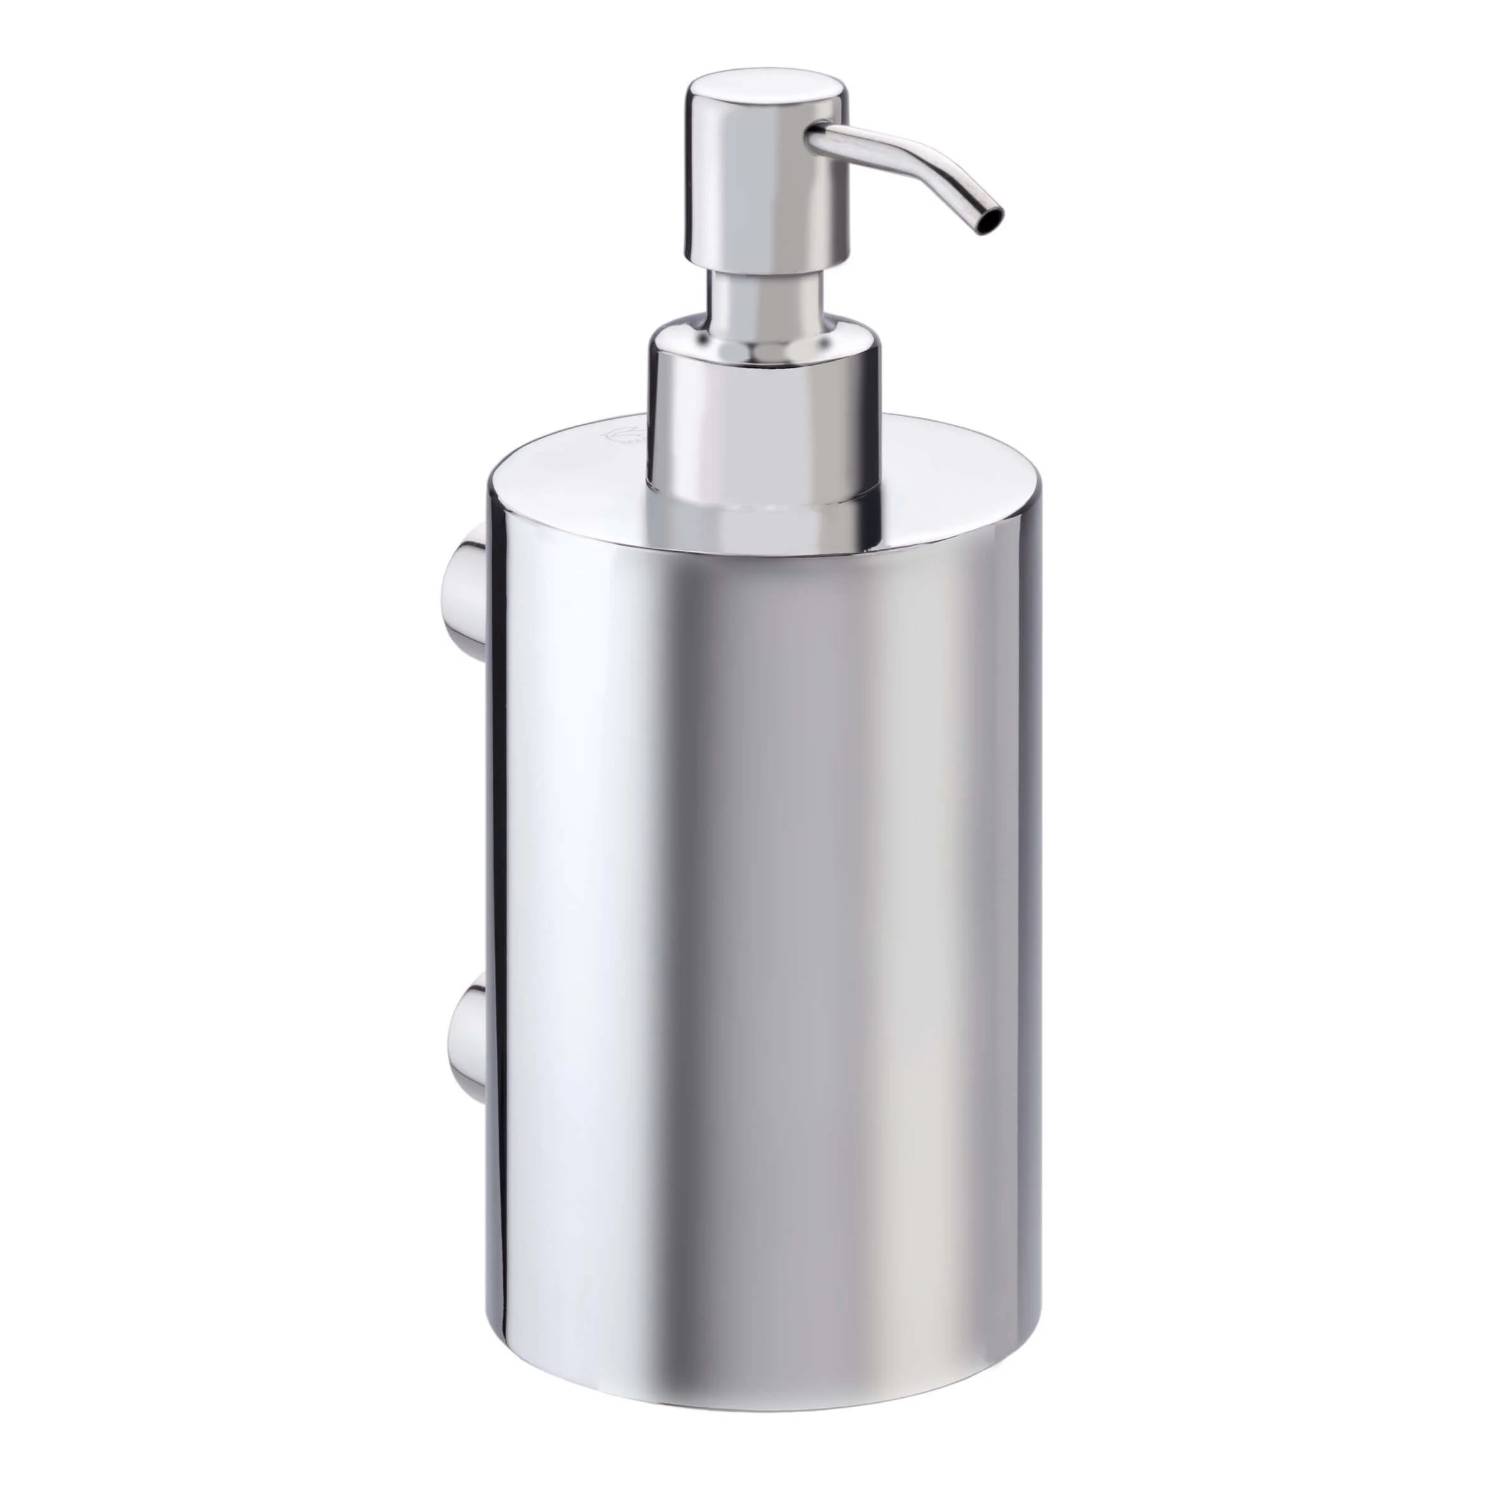 BC613 Dolphin Stainless Steel Soap Dispenser 